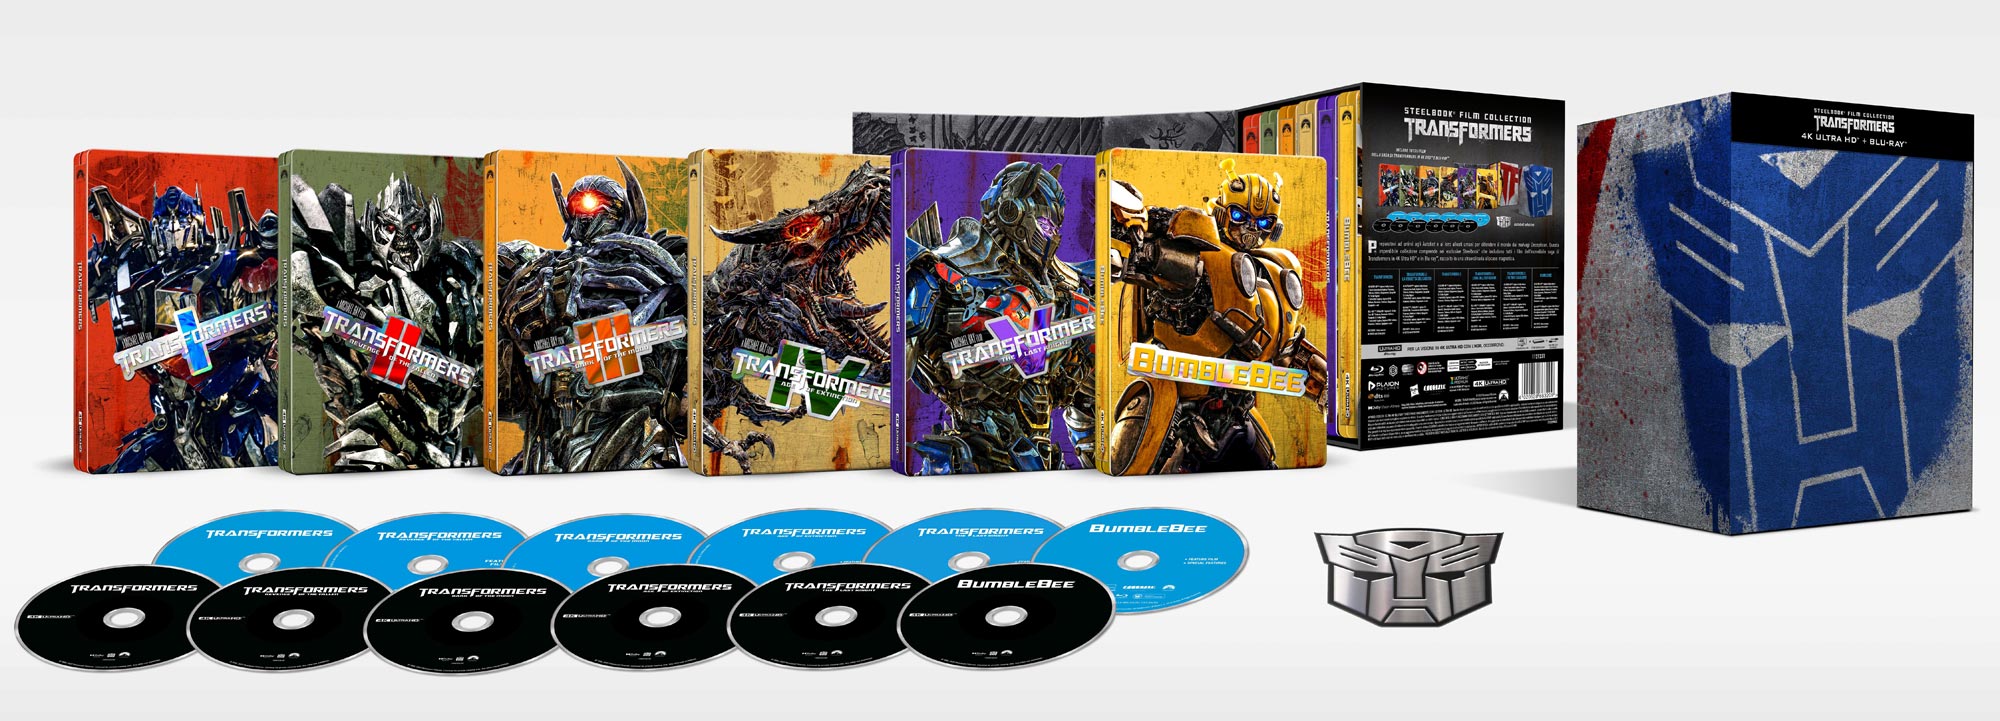 Transformers - Steelbook Film Collection (film 2007-2018)